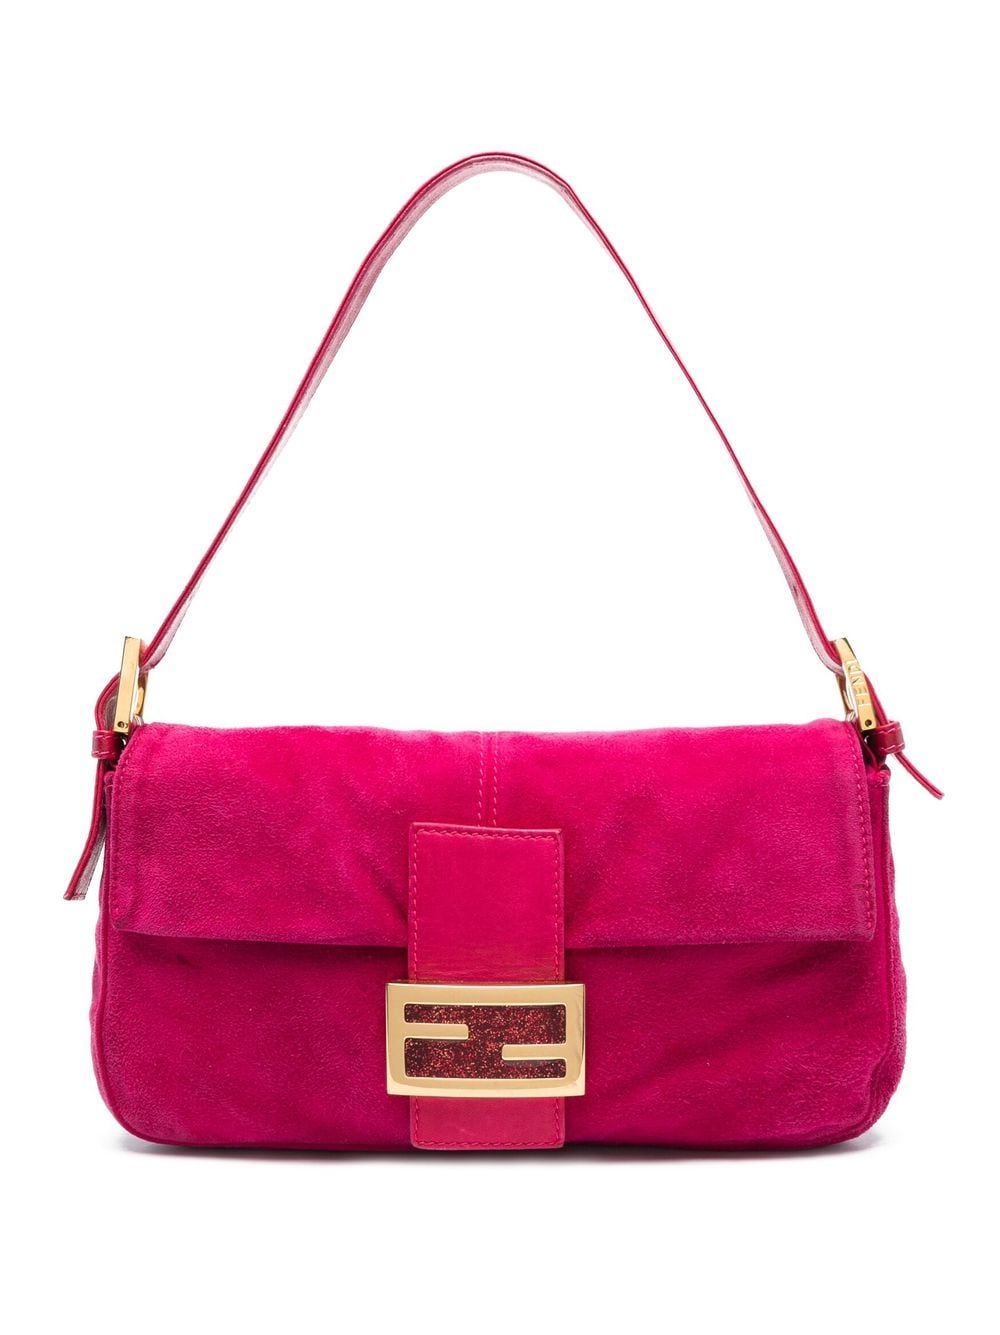 Fendi Baguette Shoulder Bag in Pink Suede – Fancy Lux